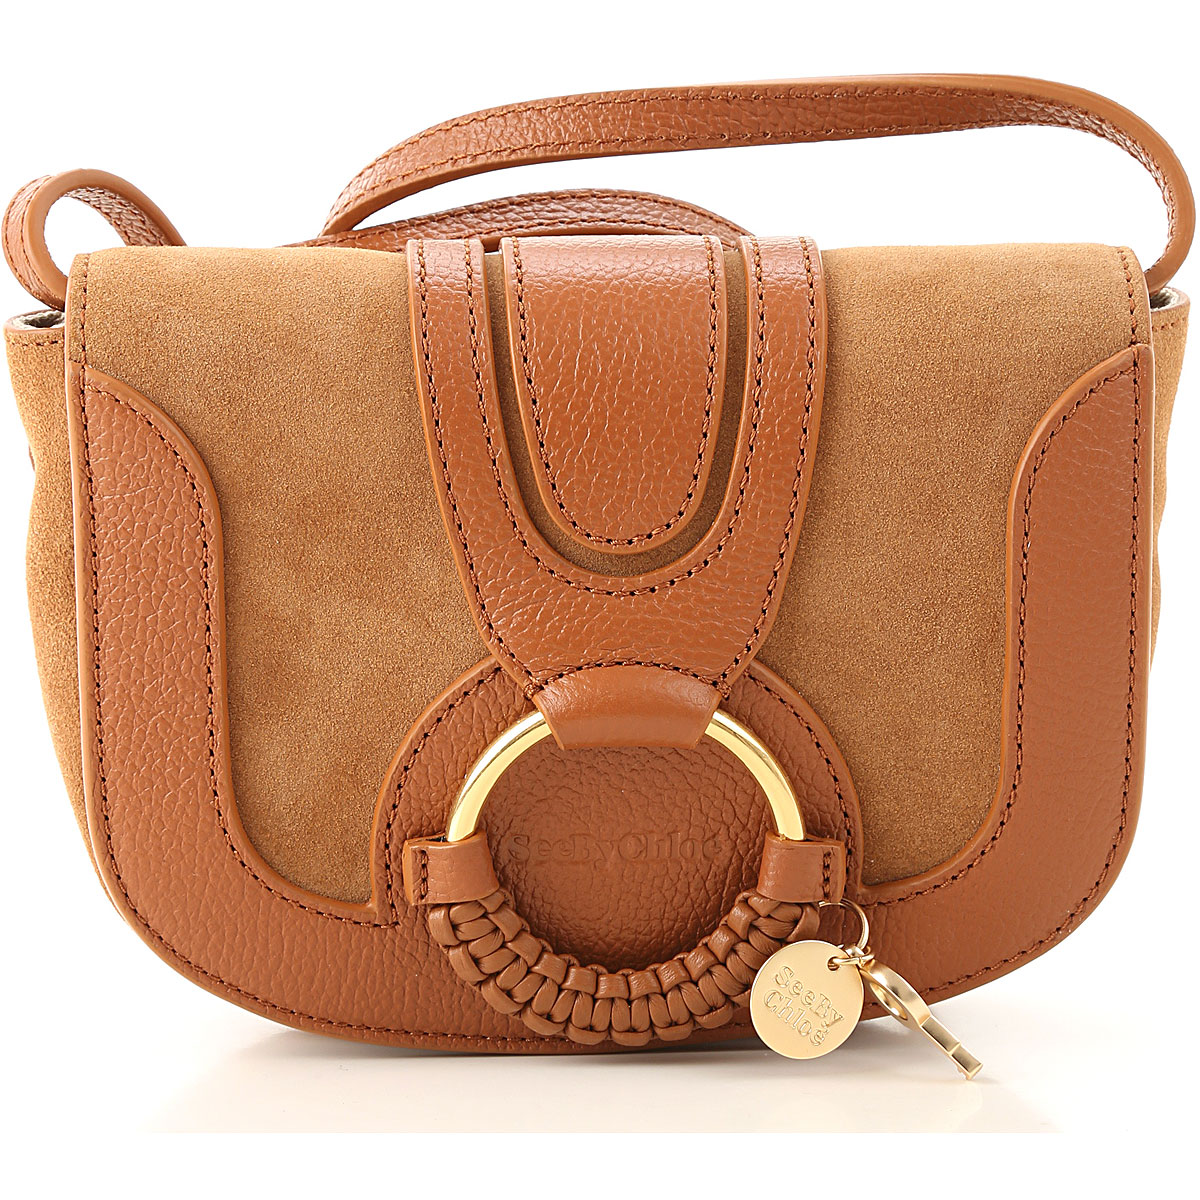 Handbags See By Chloe Style Code Chs18as901417242